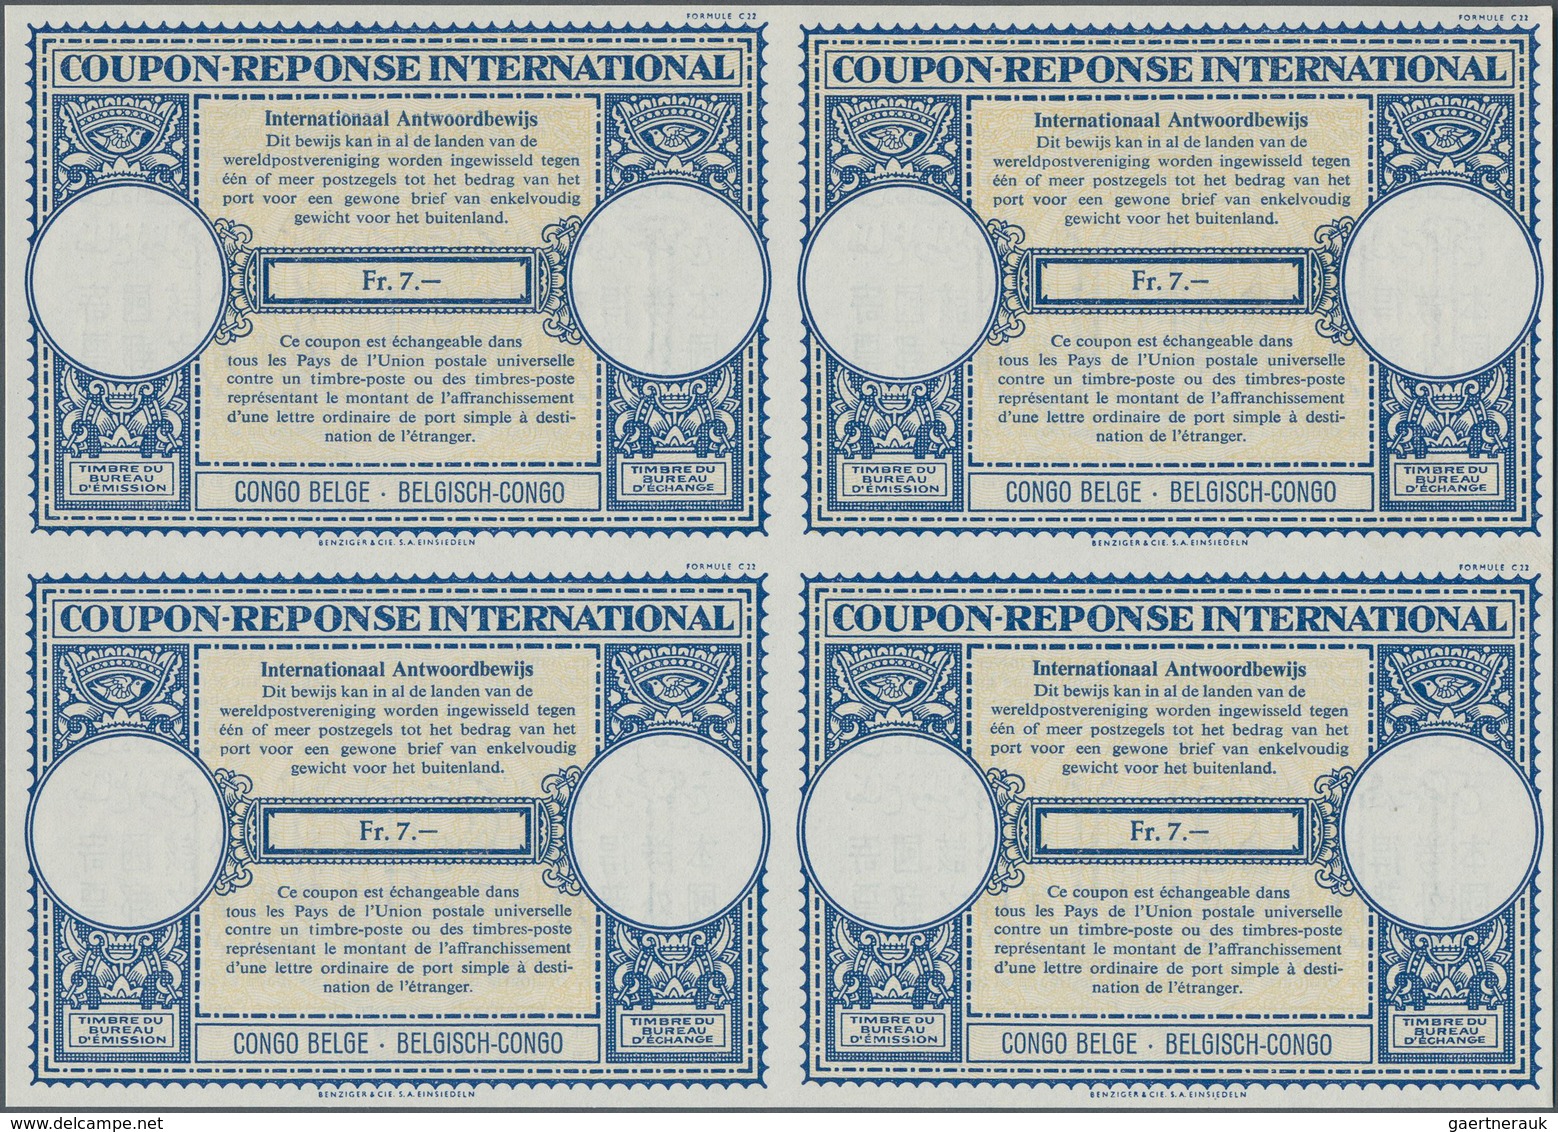 Belgisch-Kongo: 1958. International Reply Coupon Fr. 7.- (London Type) In An Unused Block Of 4. Issu - Sammlungen